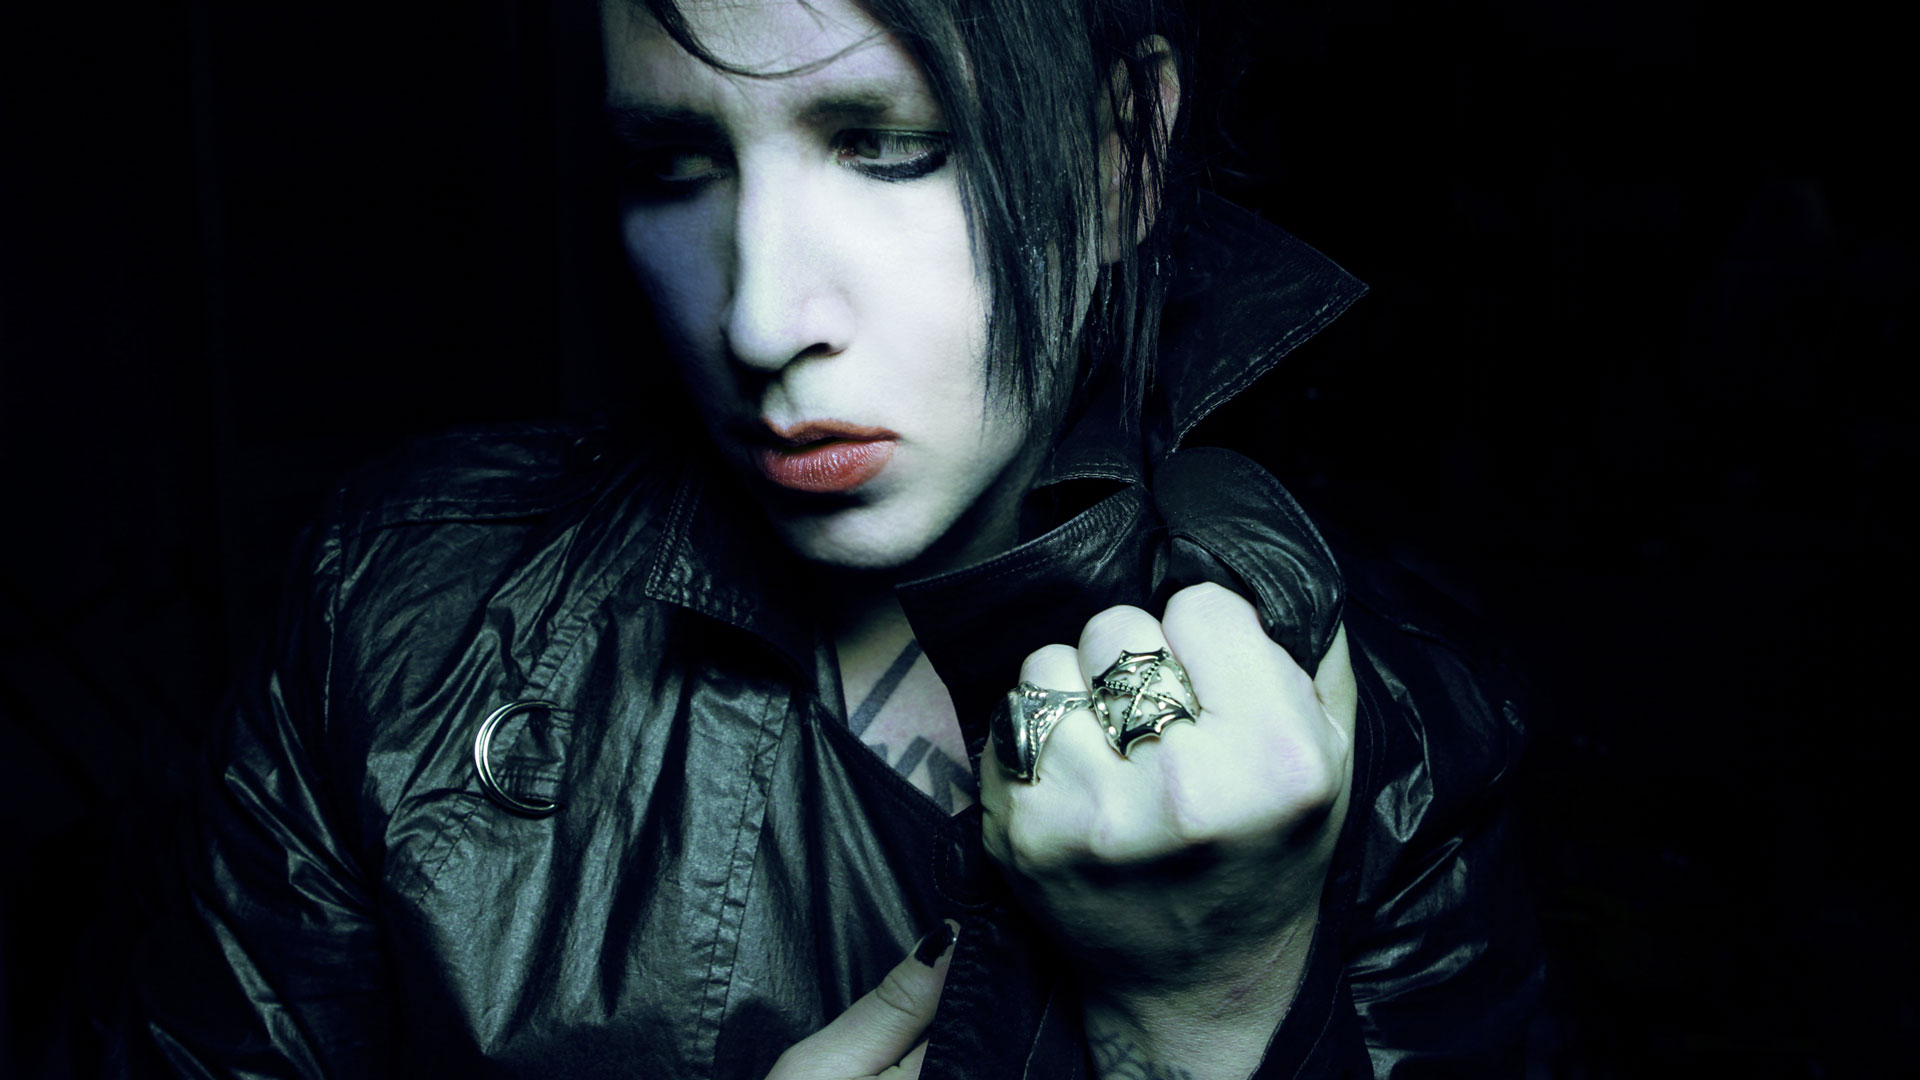 Marilyn Manson (@marilynmanson) • Instagram photos and videos